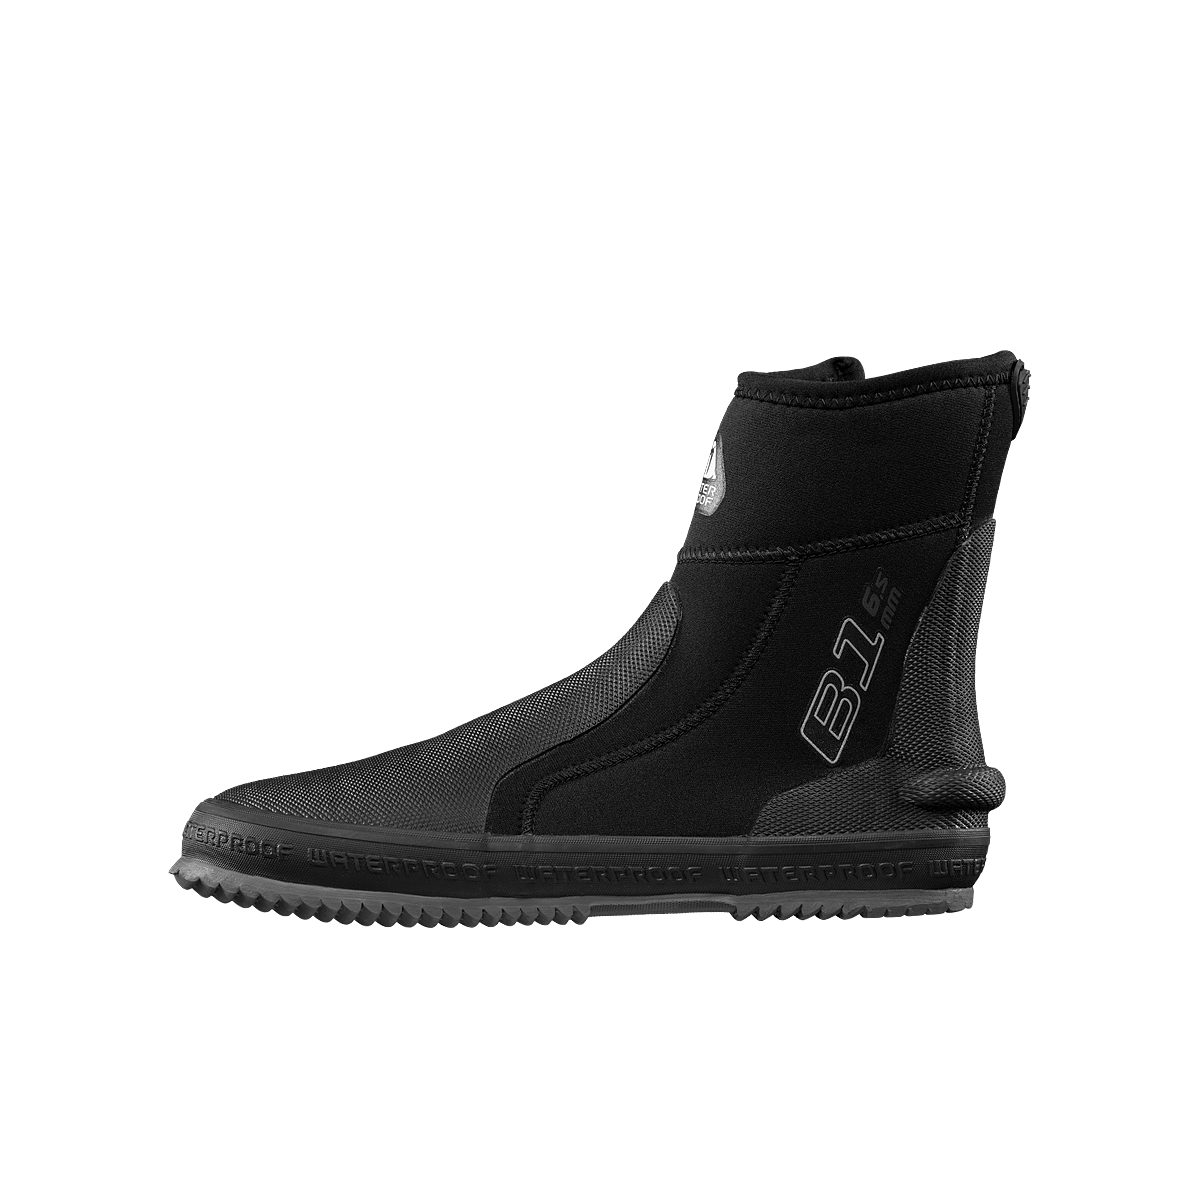 Waterproof B1 Boots-2XS